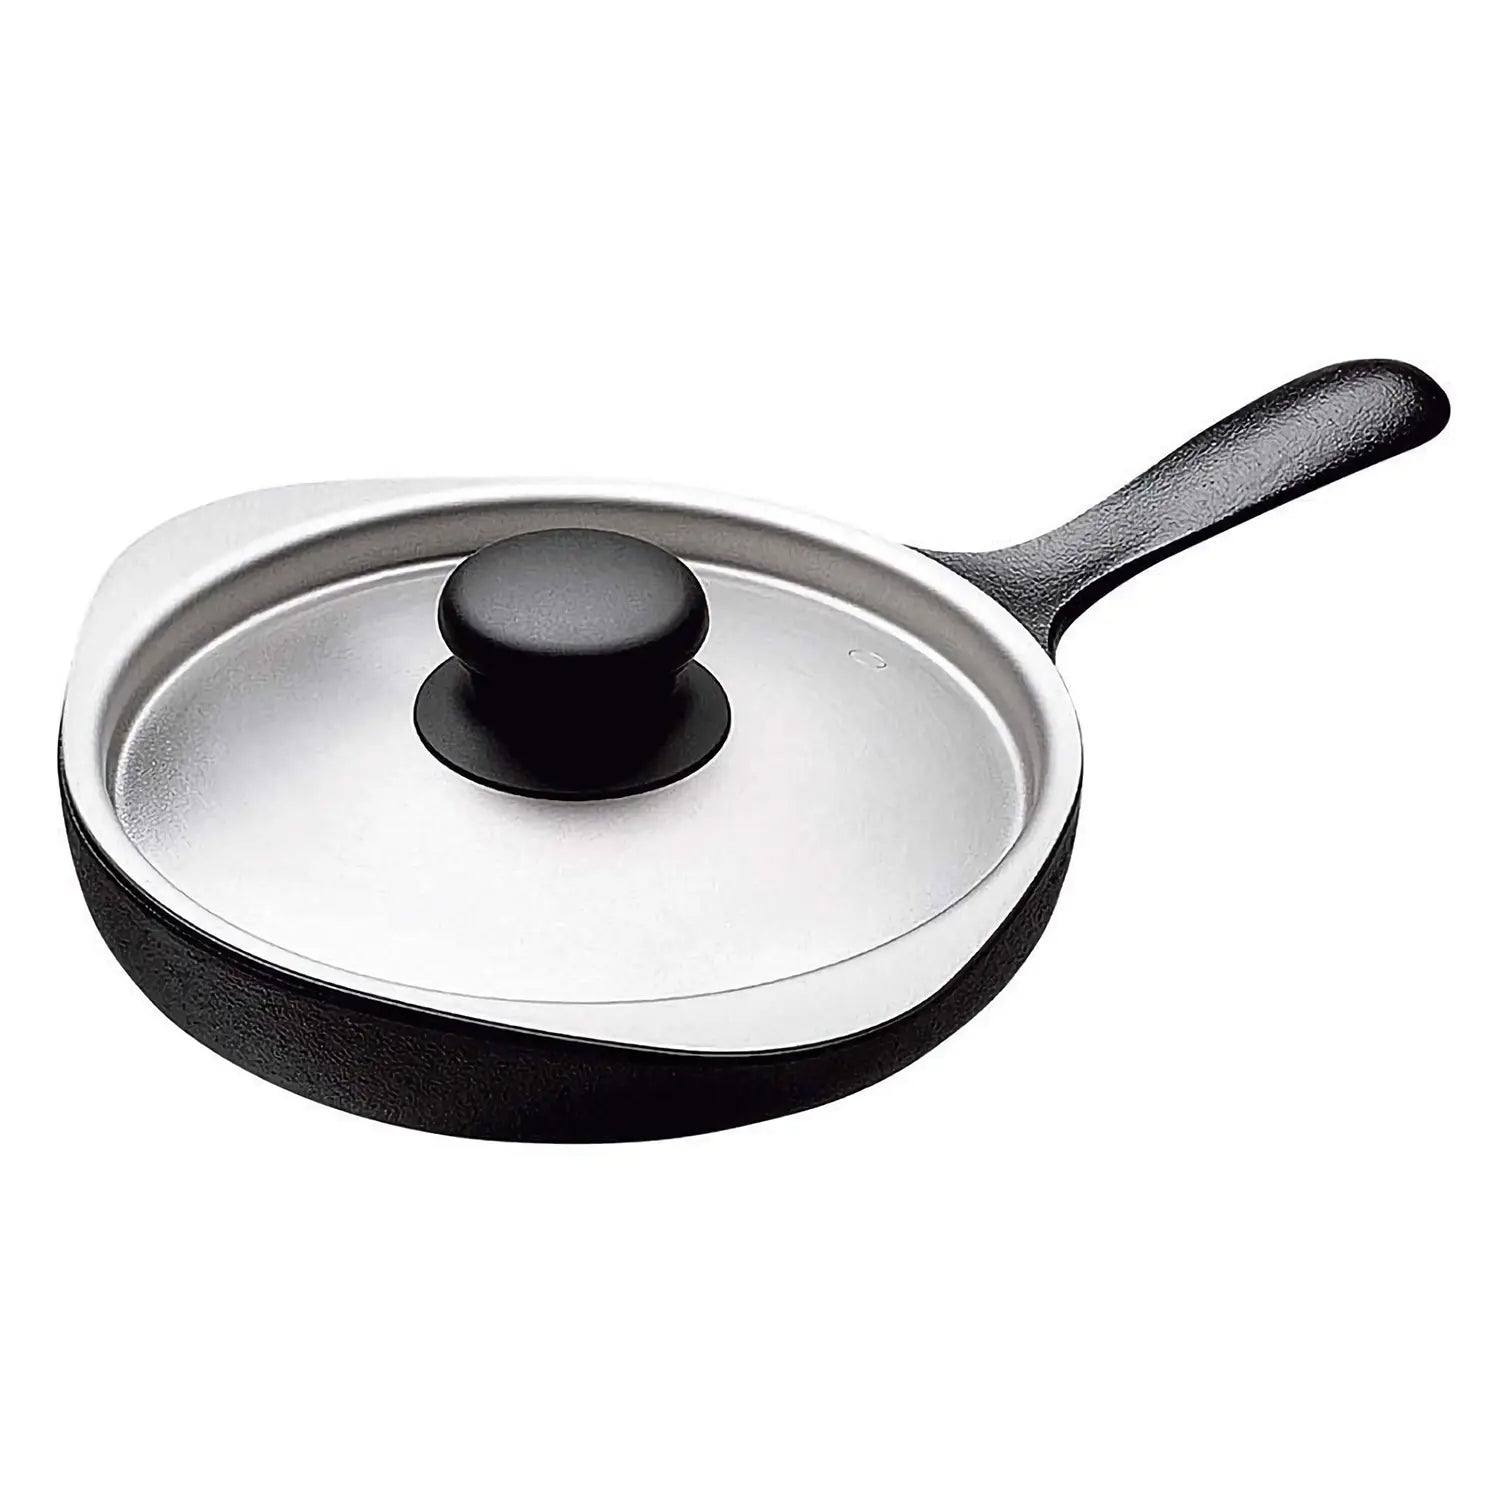 Small pan cast iron